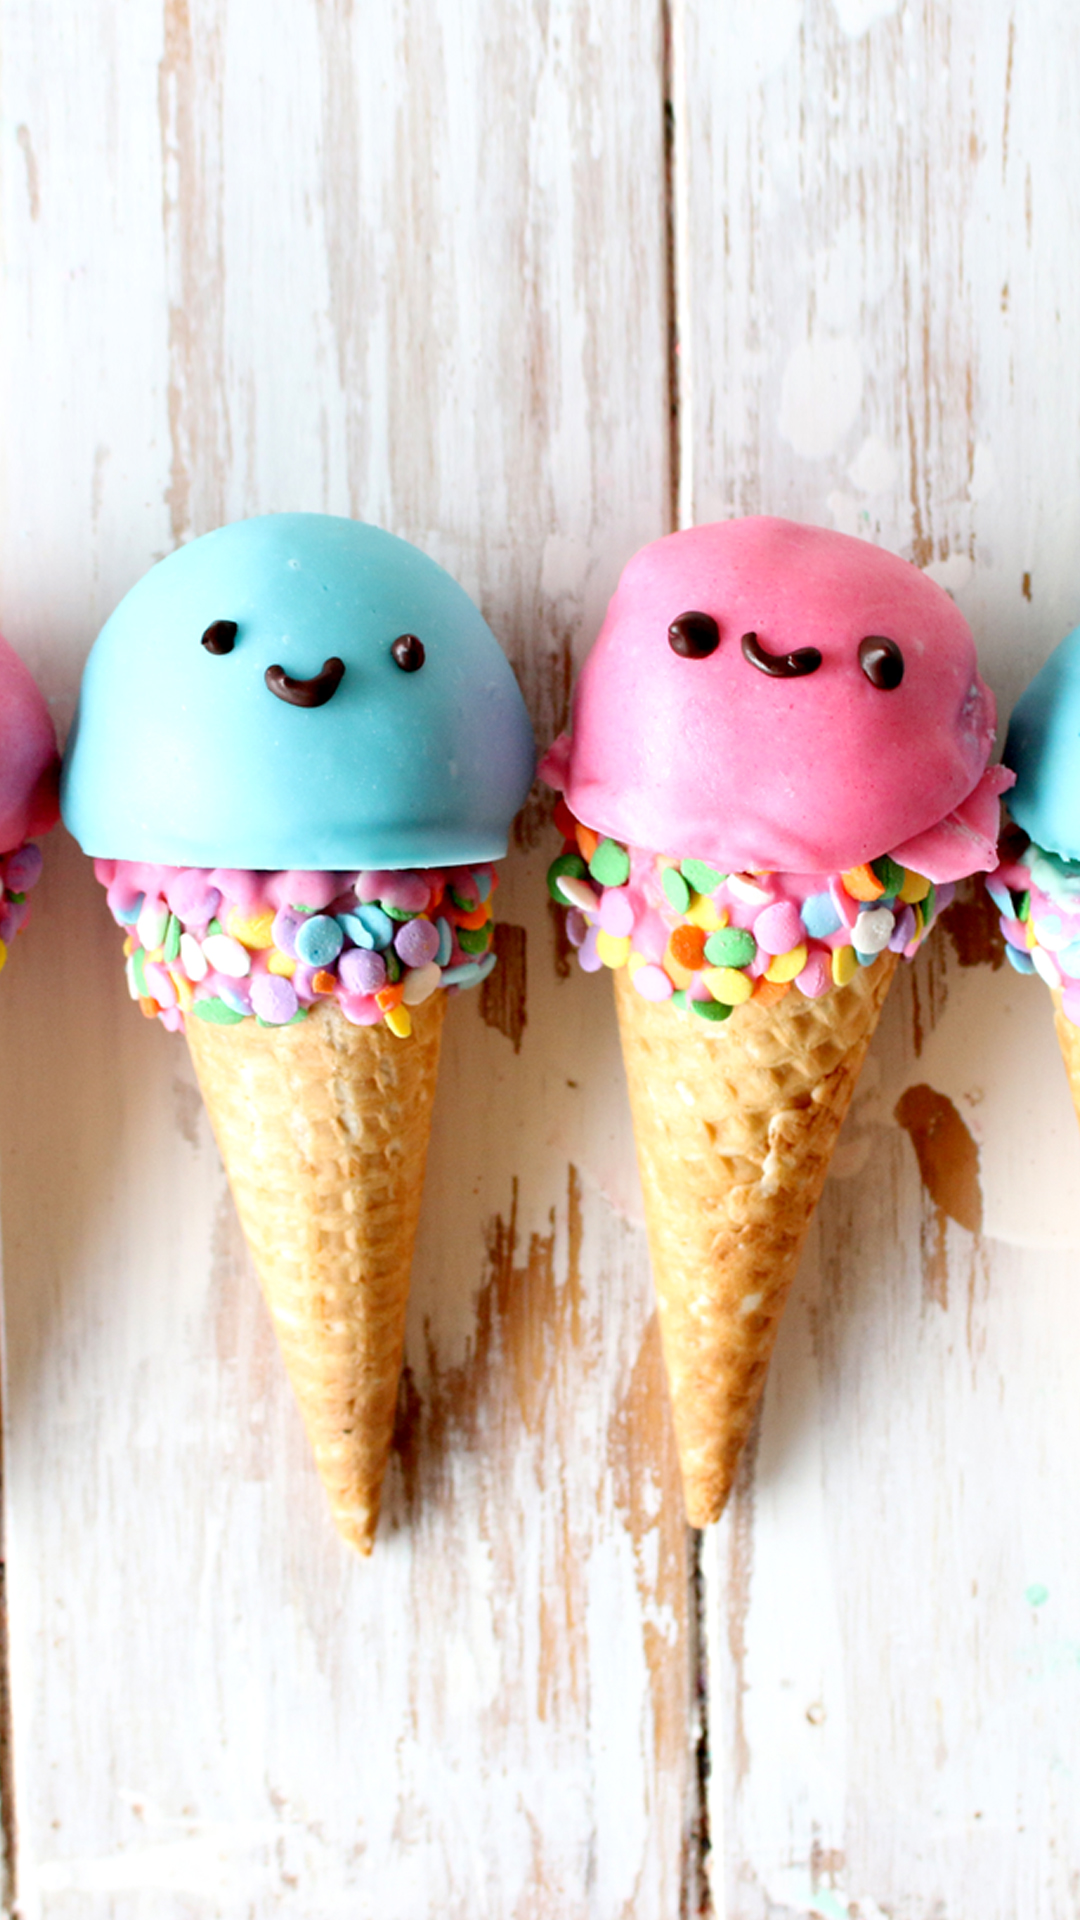 Kawaii Ice Cream Cones ~ The Scran Line | Tastemade